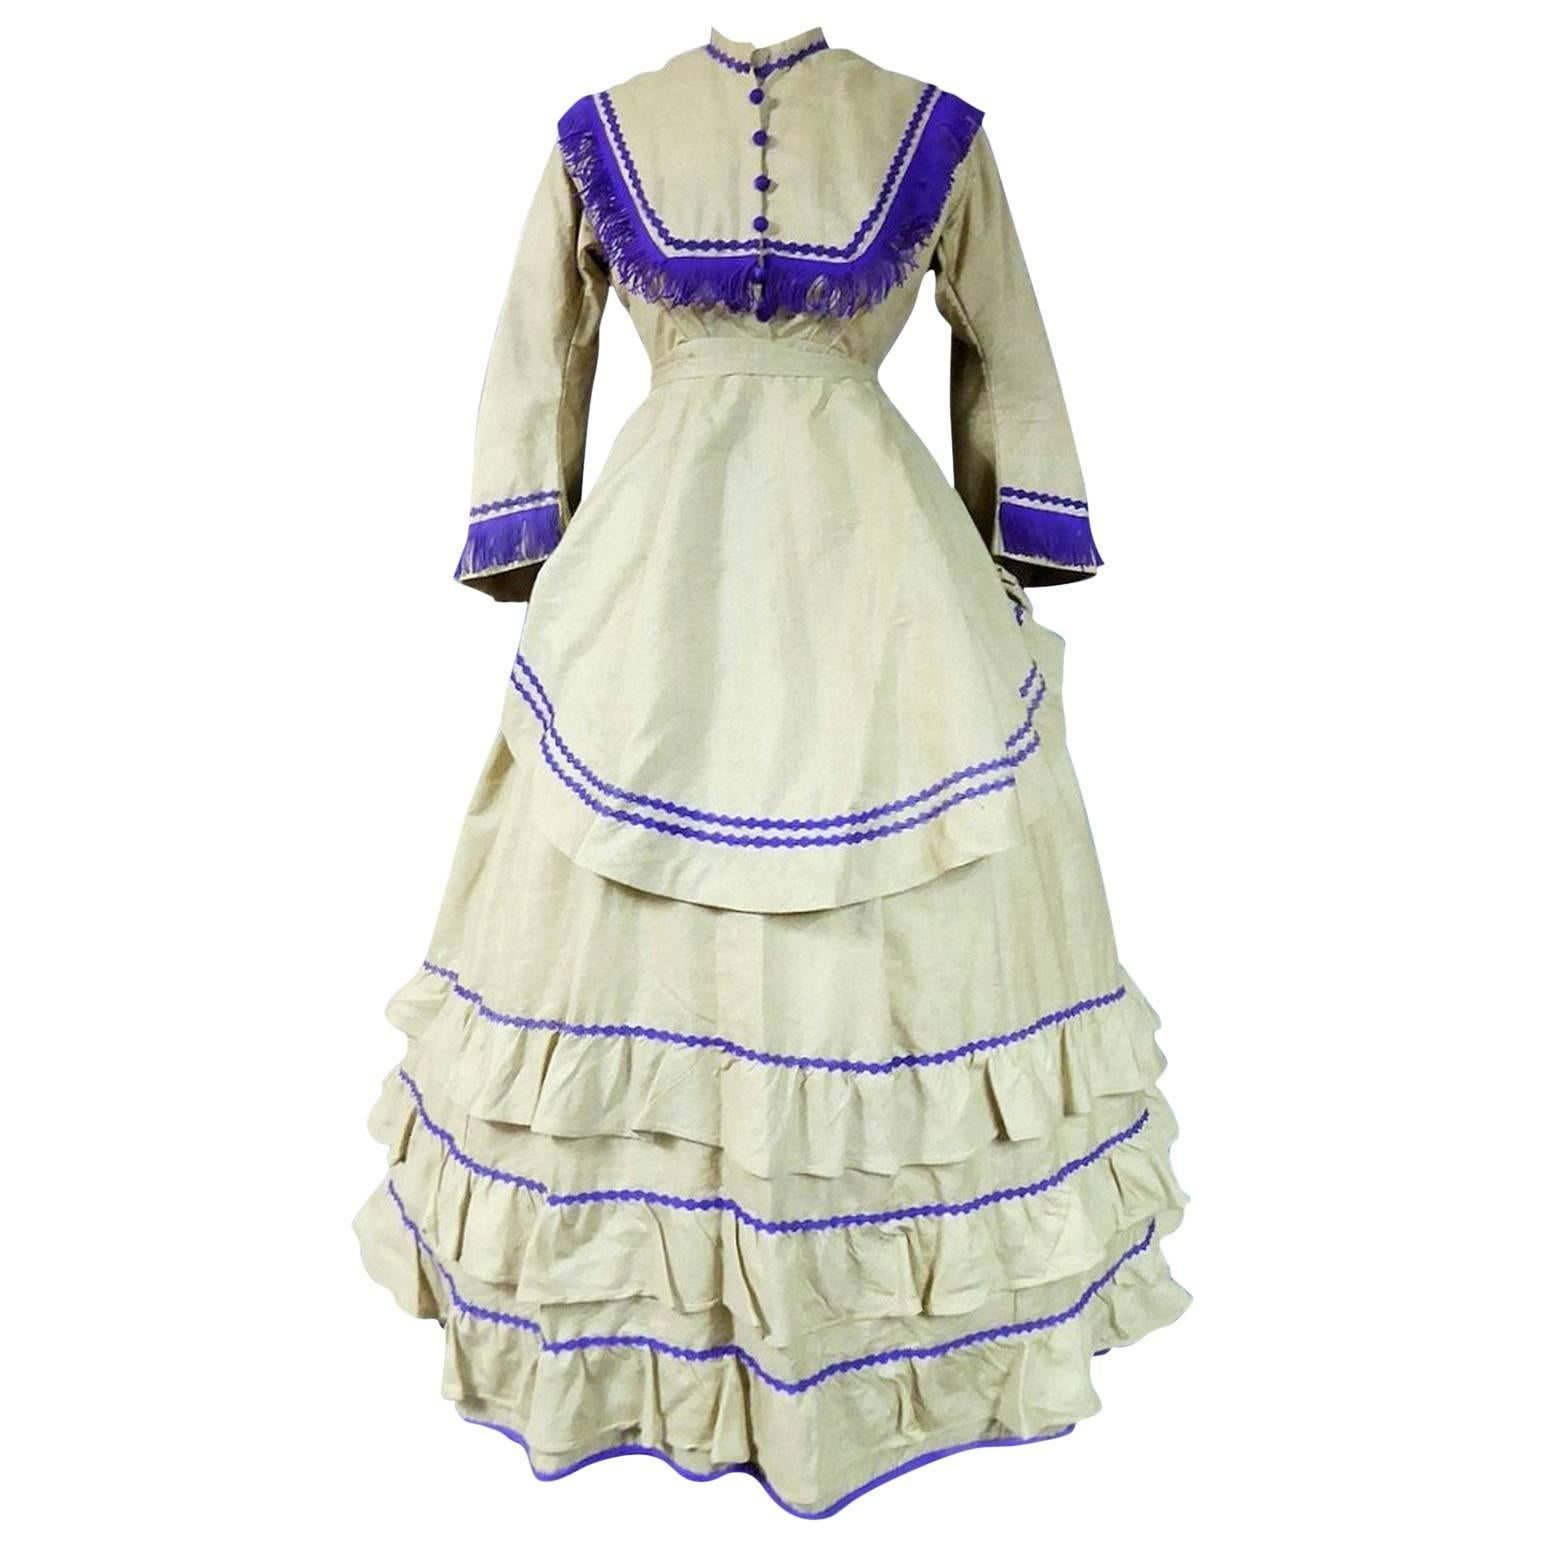 Promenade Challis Crinoline Dress From 1860